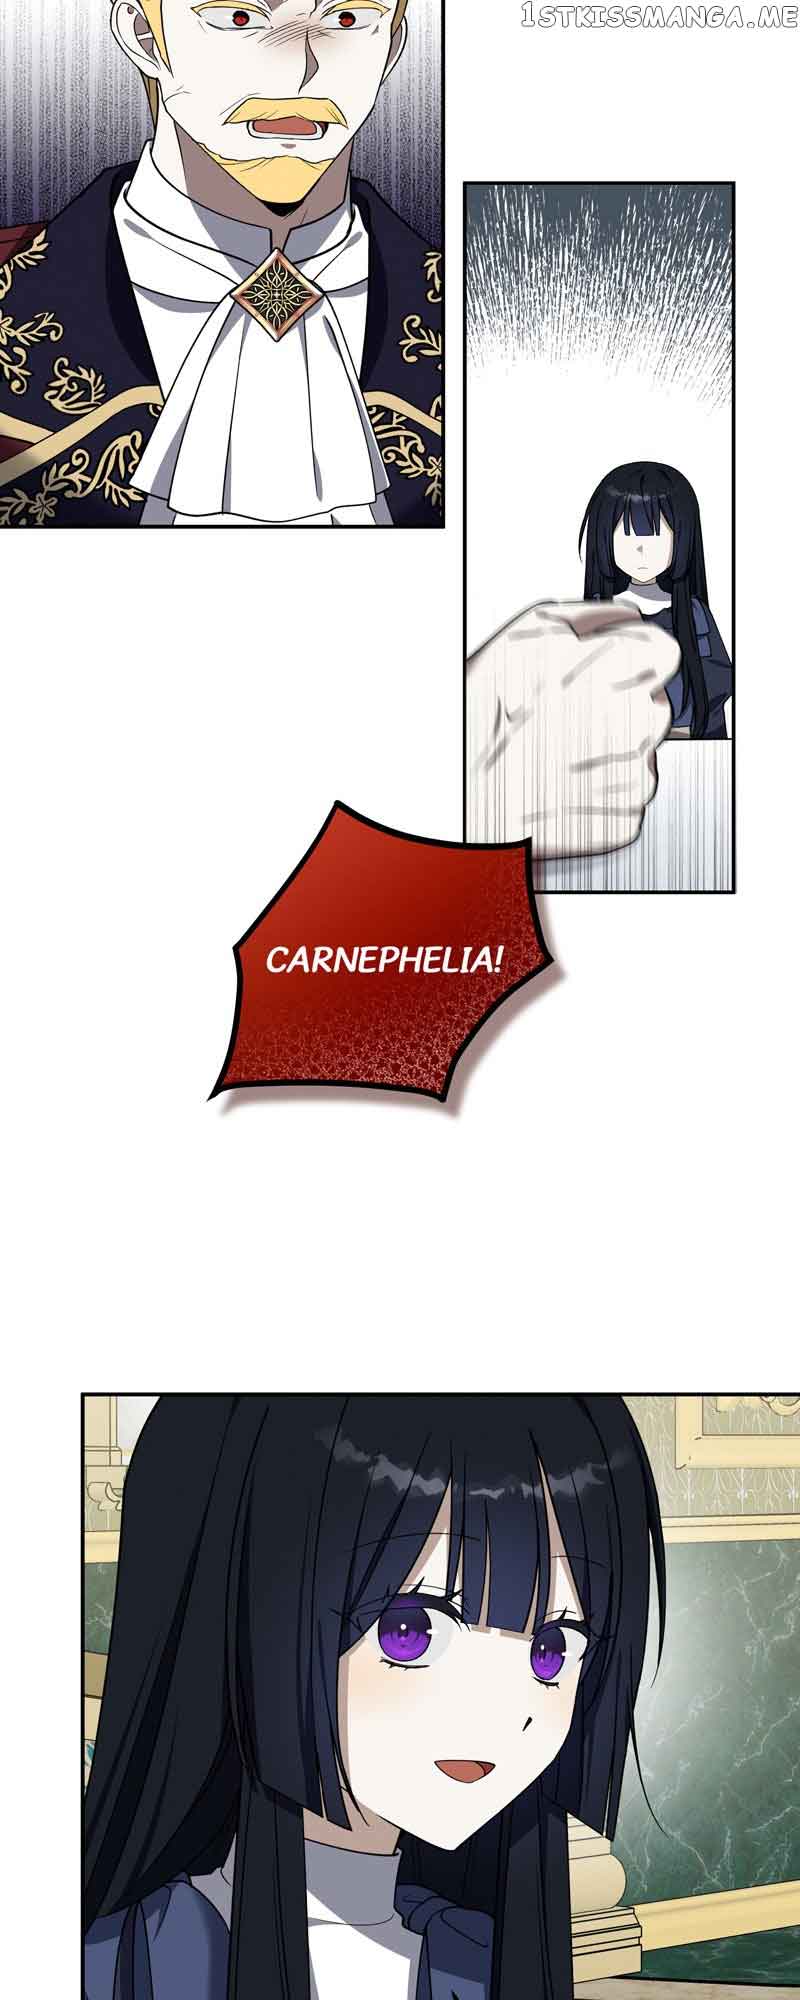 Carnephelia’s Curse is Never Ending chapter 14